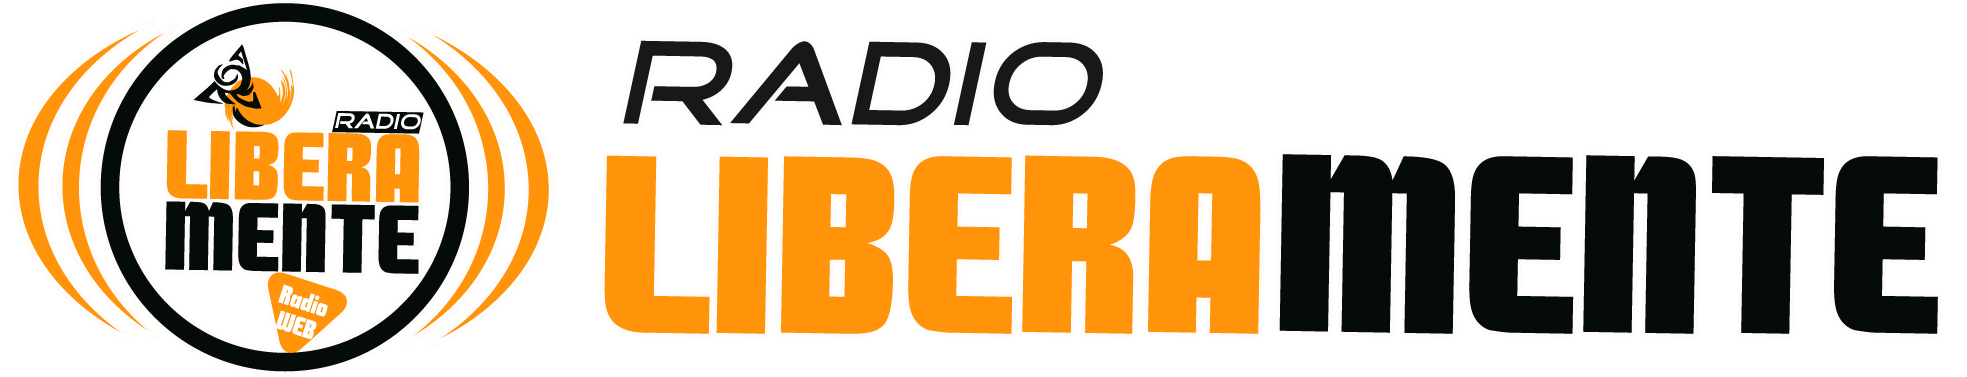 RadioLiberaMente